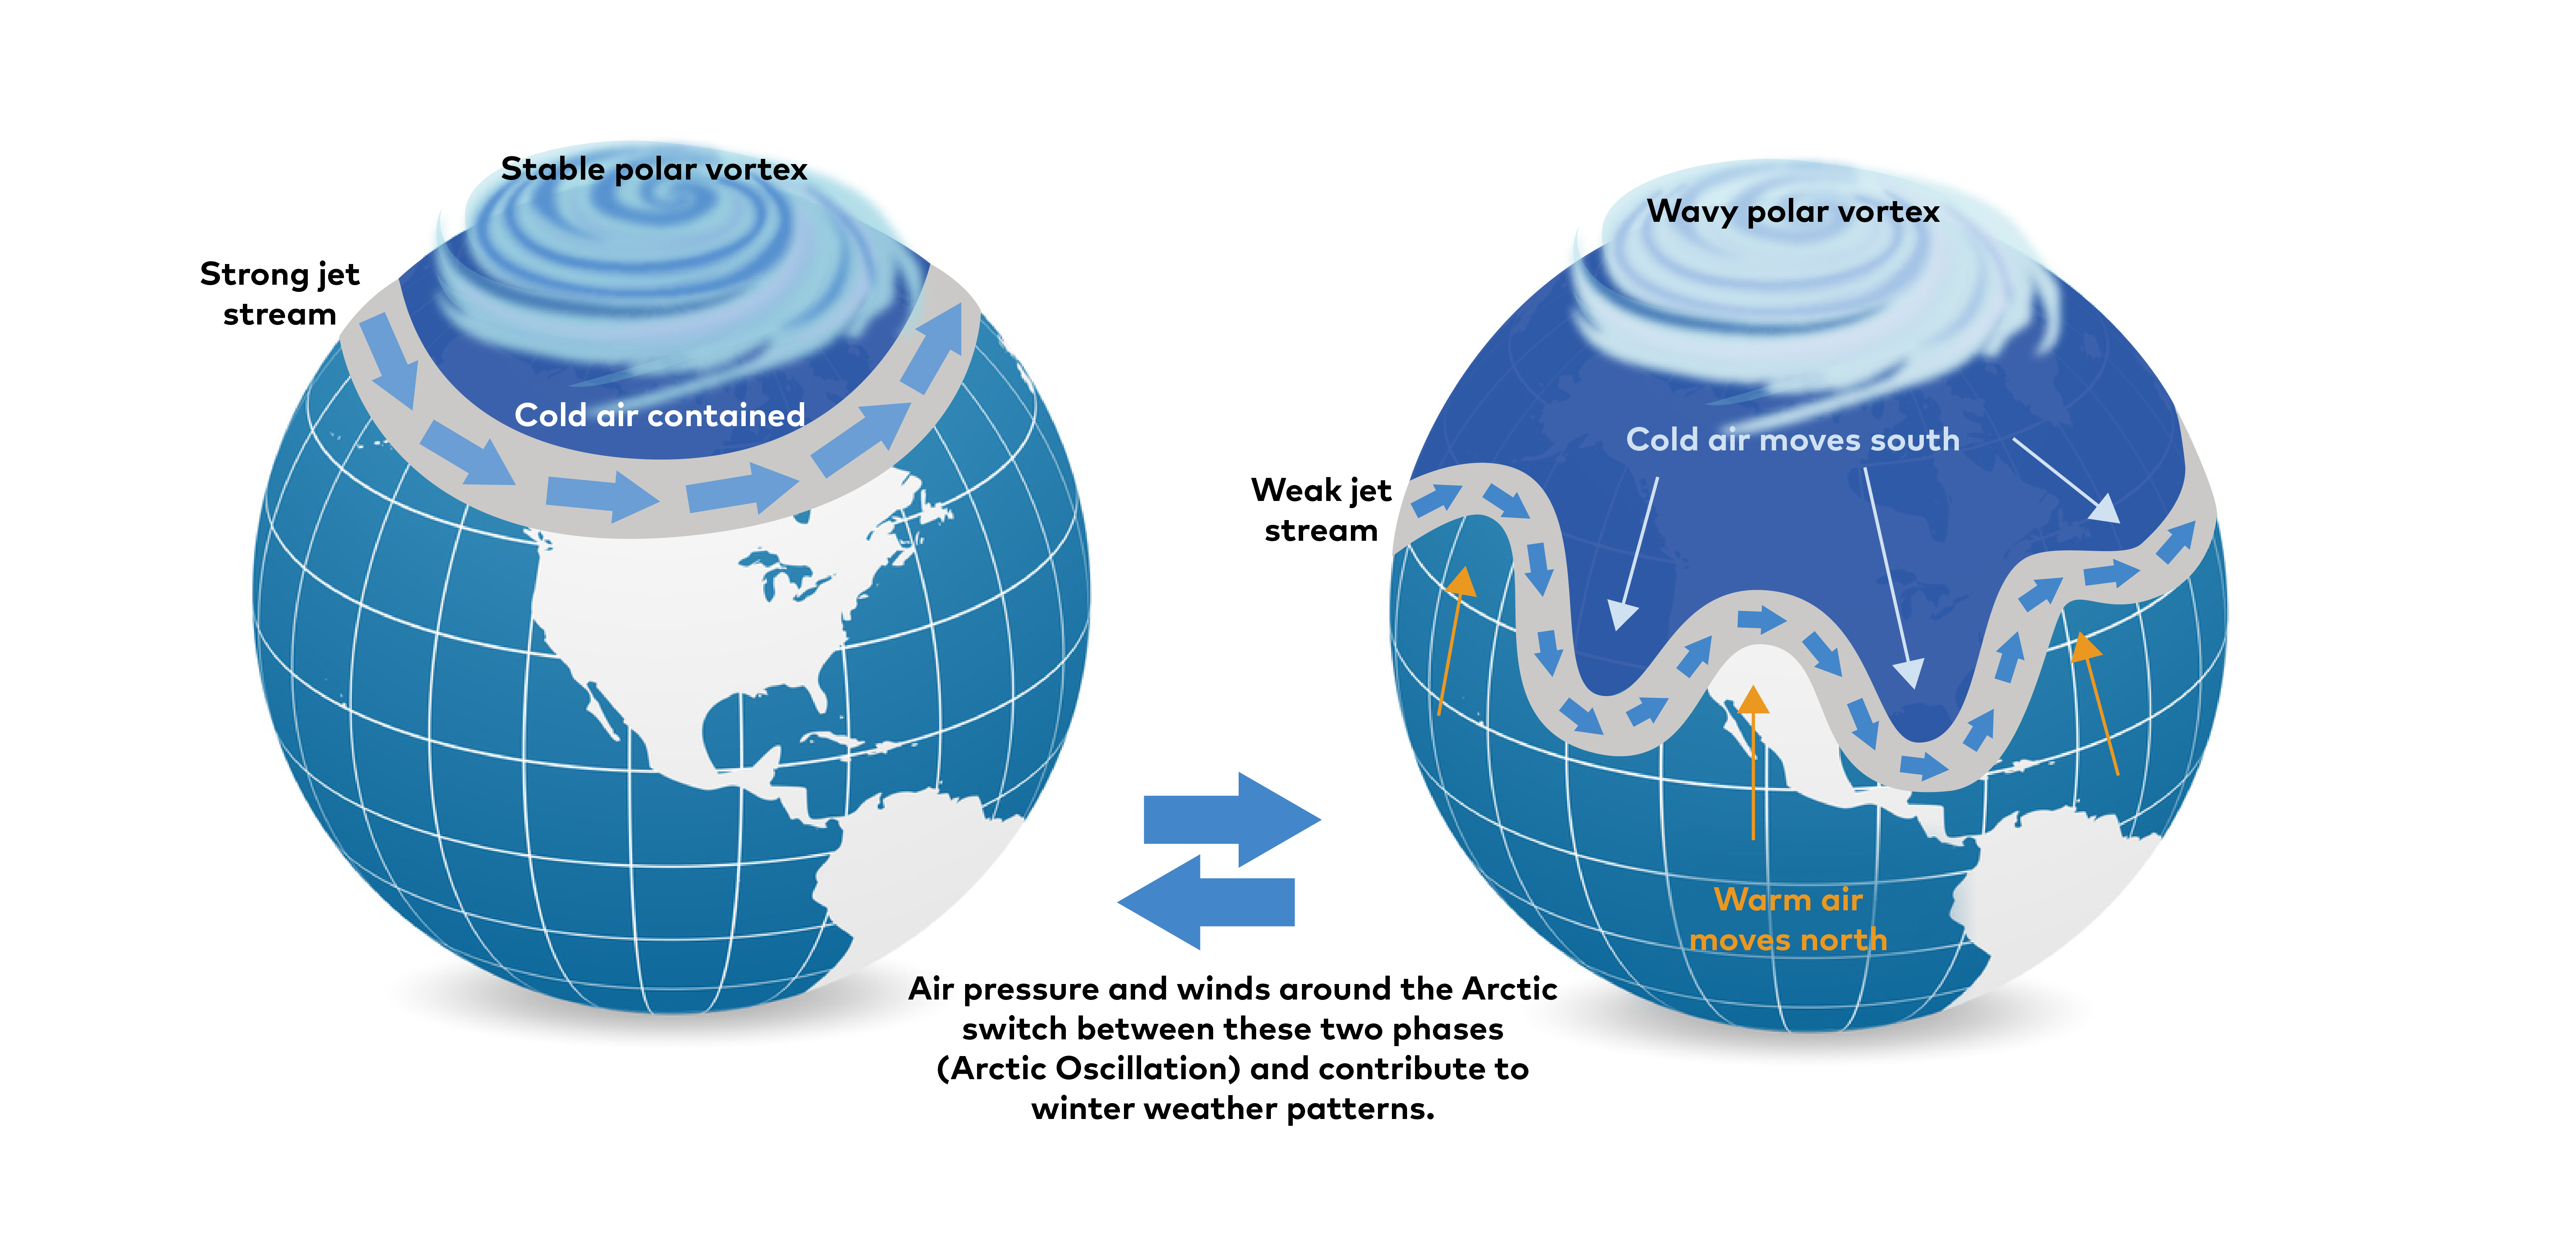 Stable polar vortex and Wavy polar vortex